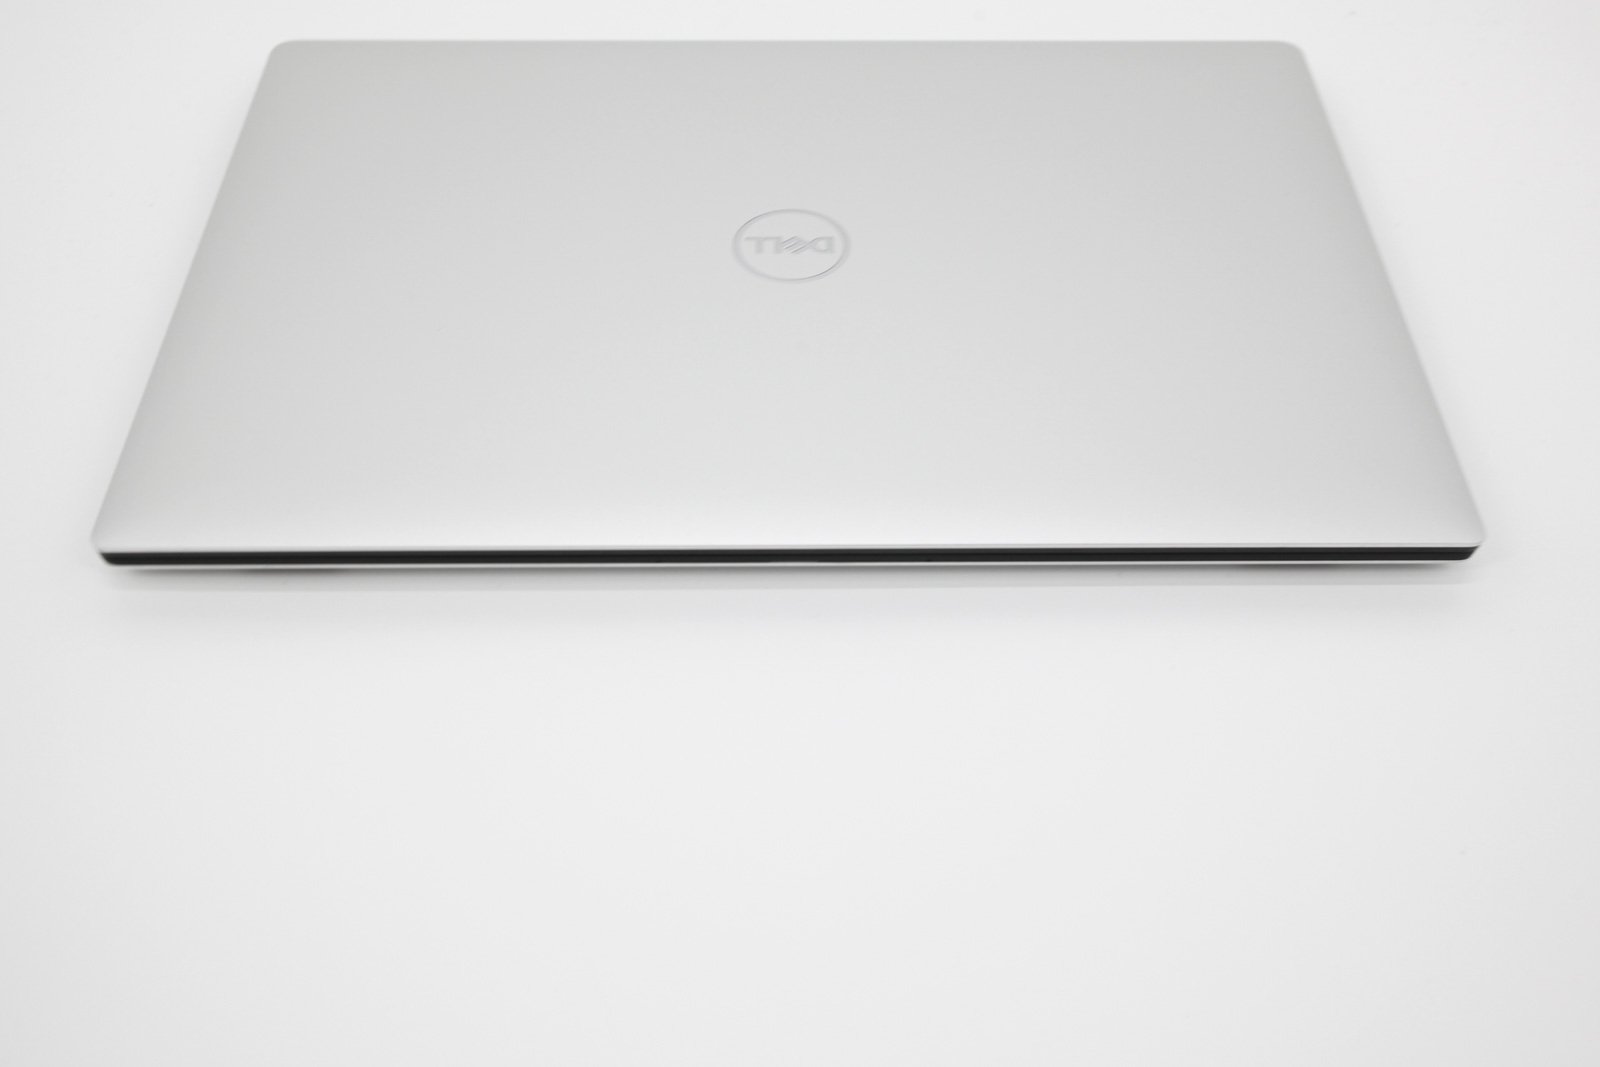 Dell XPS 15 9570 Laptop: Core i7 8th Gen, NVIDIA, 16GB RAM, 512GB SSD, Warranty - CruiseTech